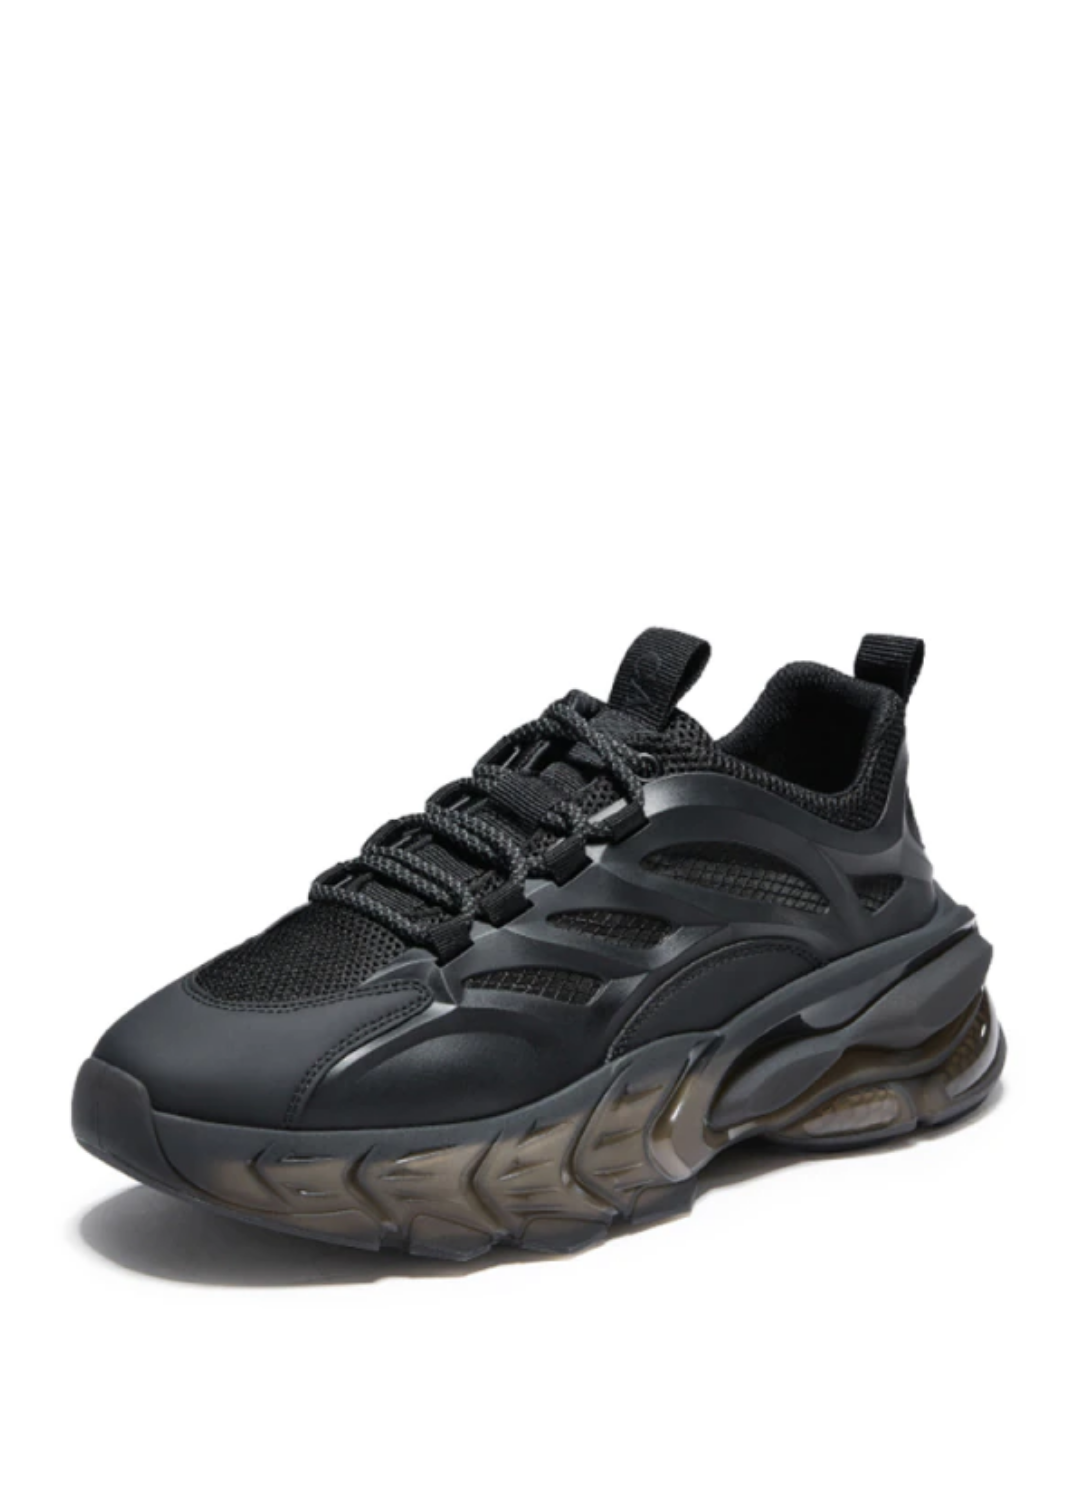 Rufo Men's Platform Sneakers | Ultrasellershoes.com – Ultra Seller Shoes